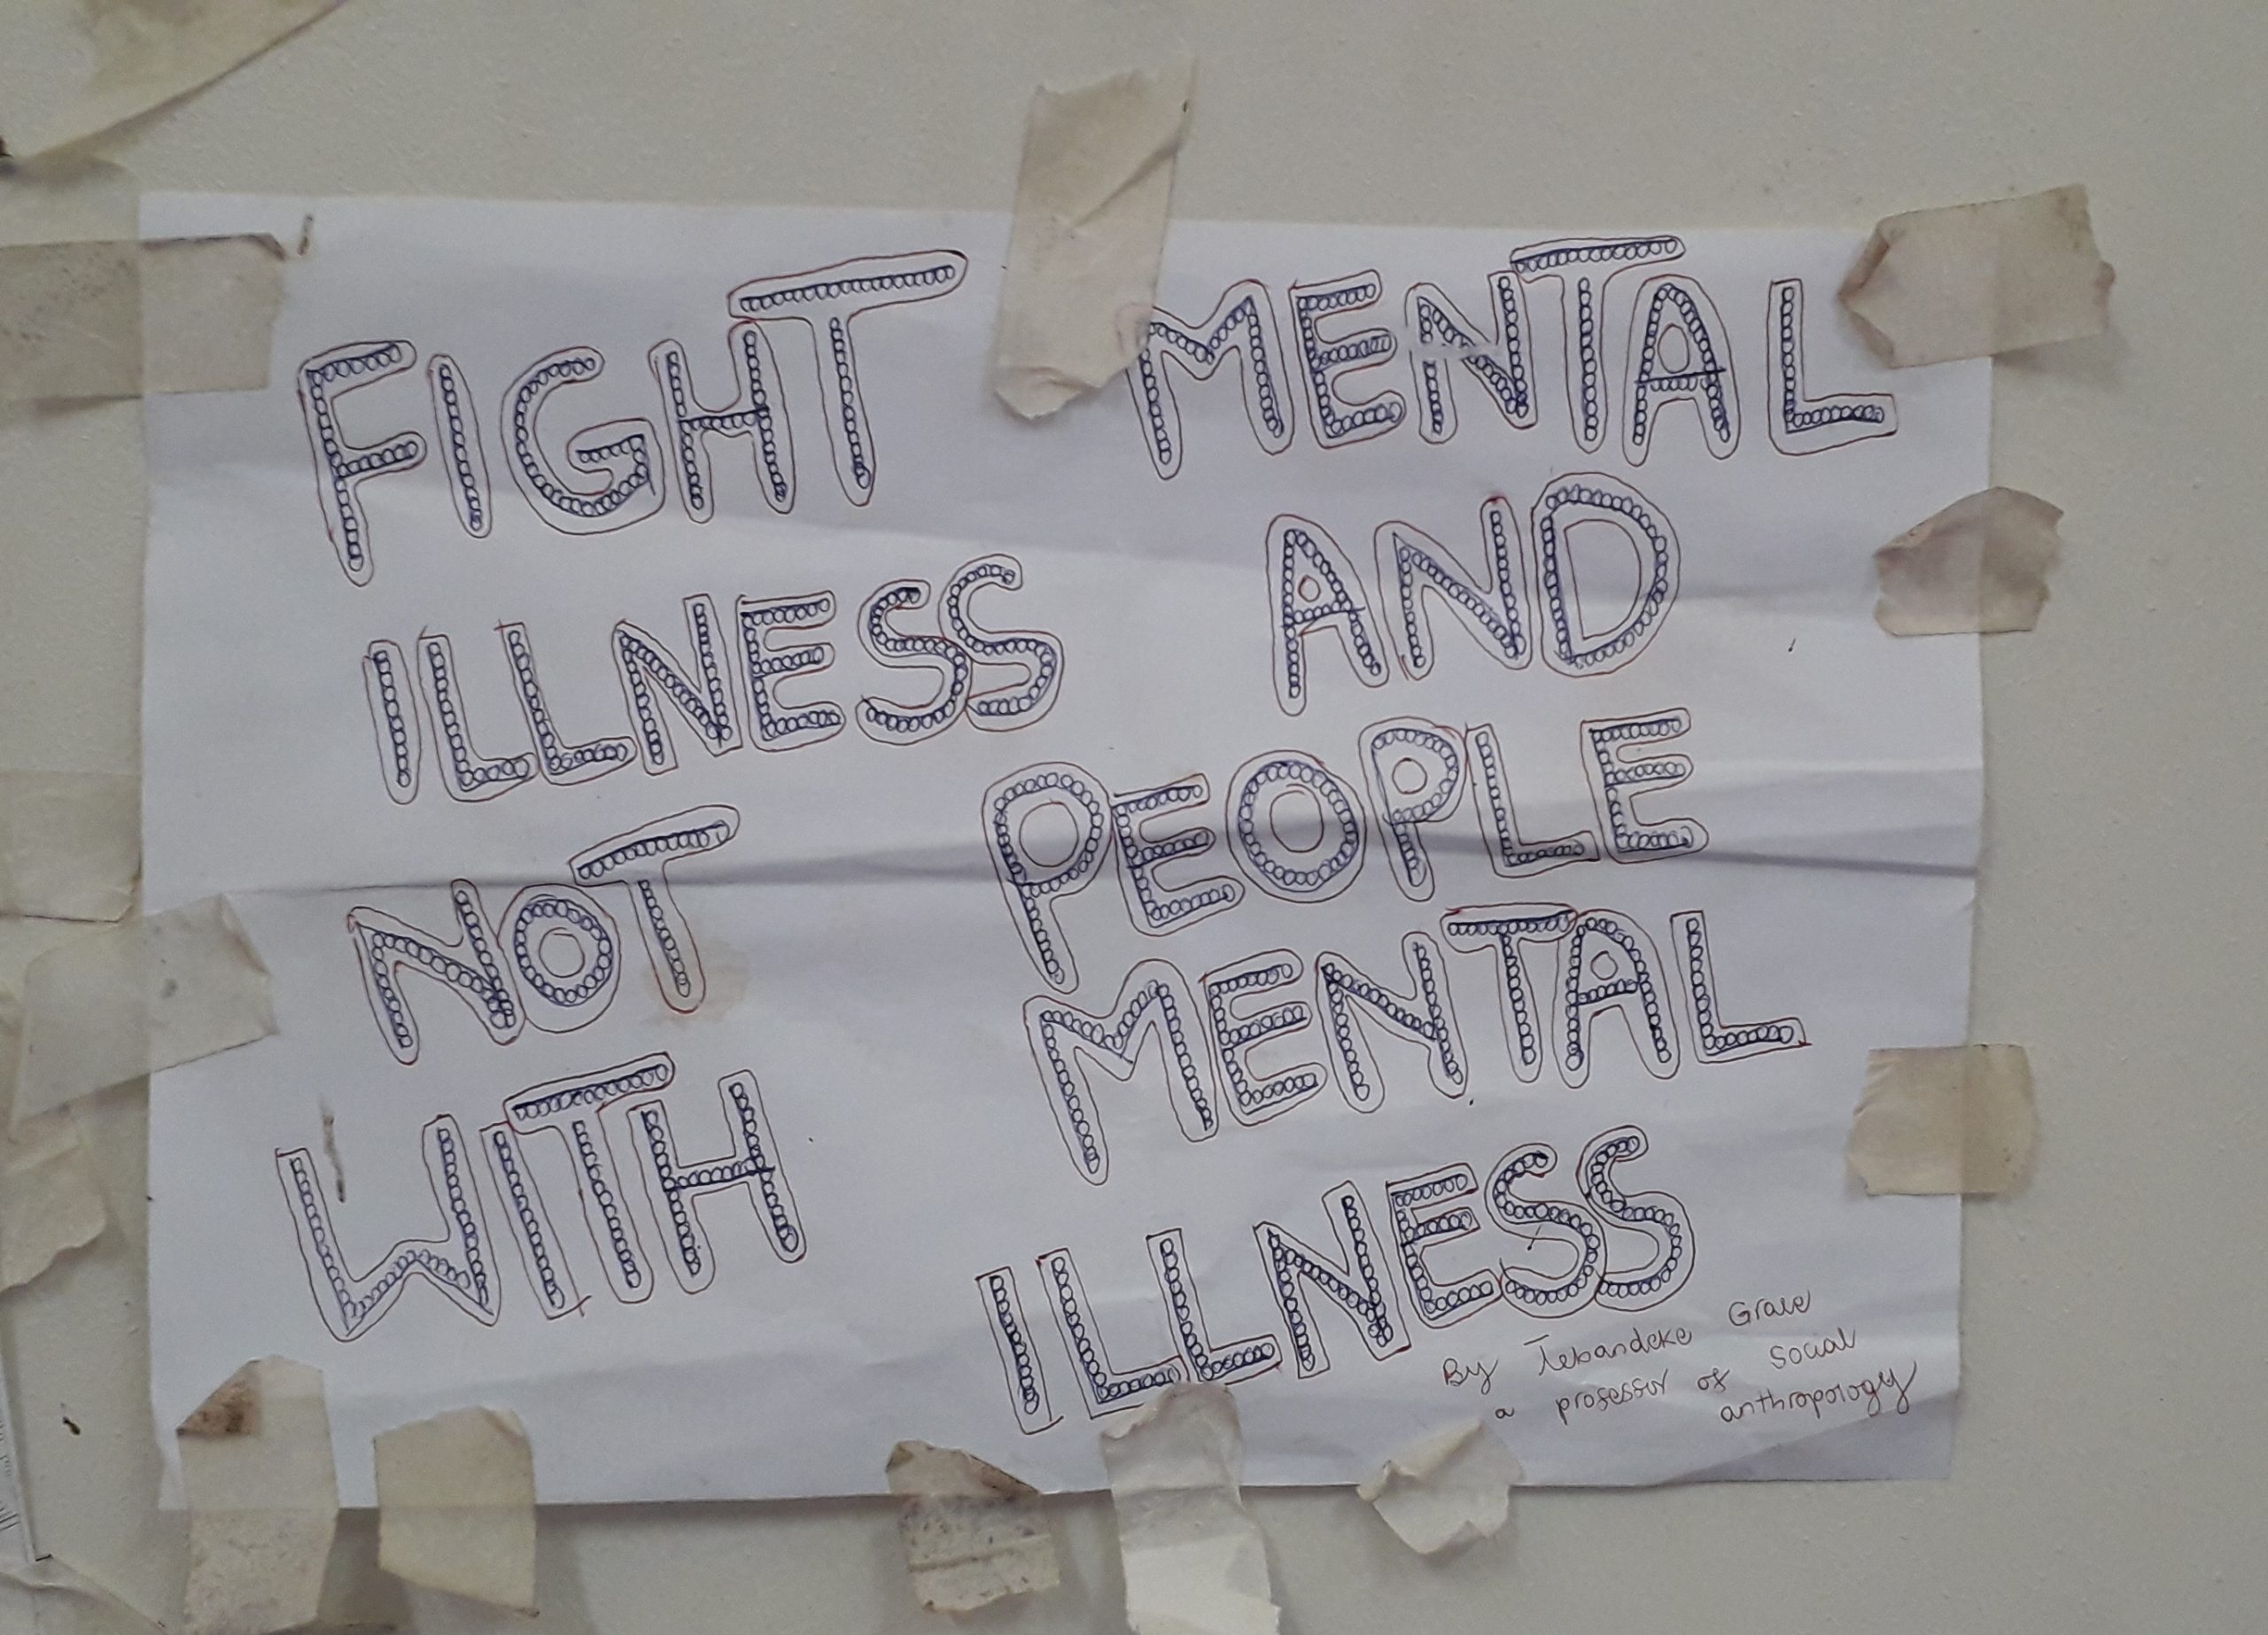 Gulu, Mental Illness